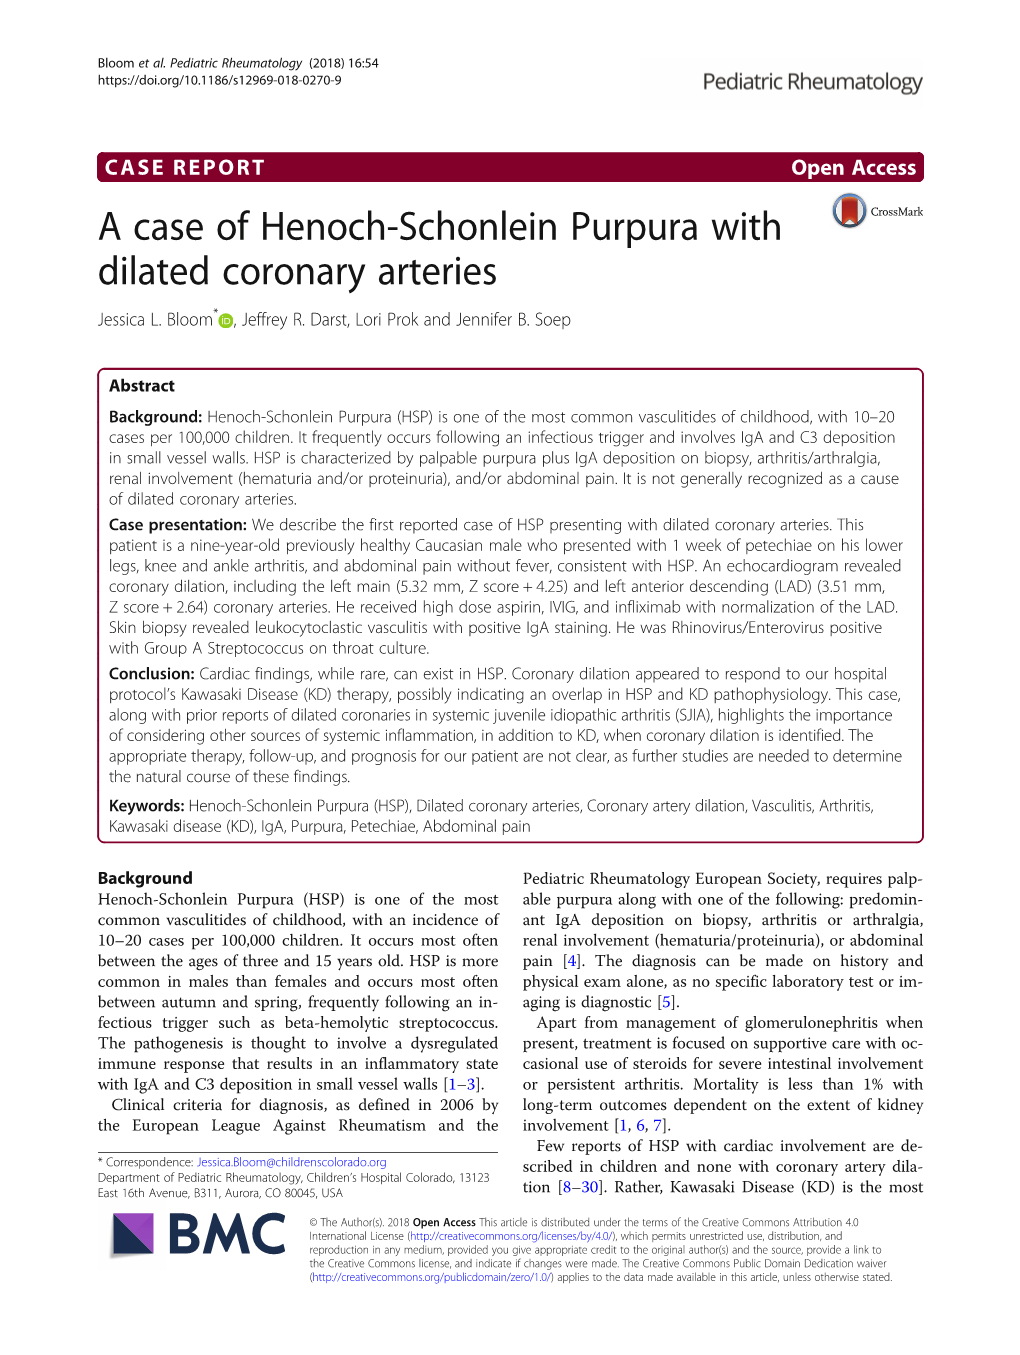 A Case of Henoch-Schonlein Purpura with Dilated Coronary Arteries Jessica L